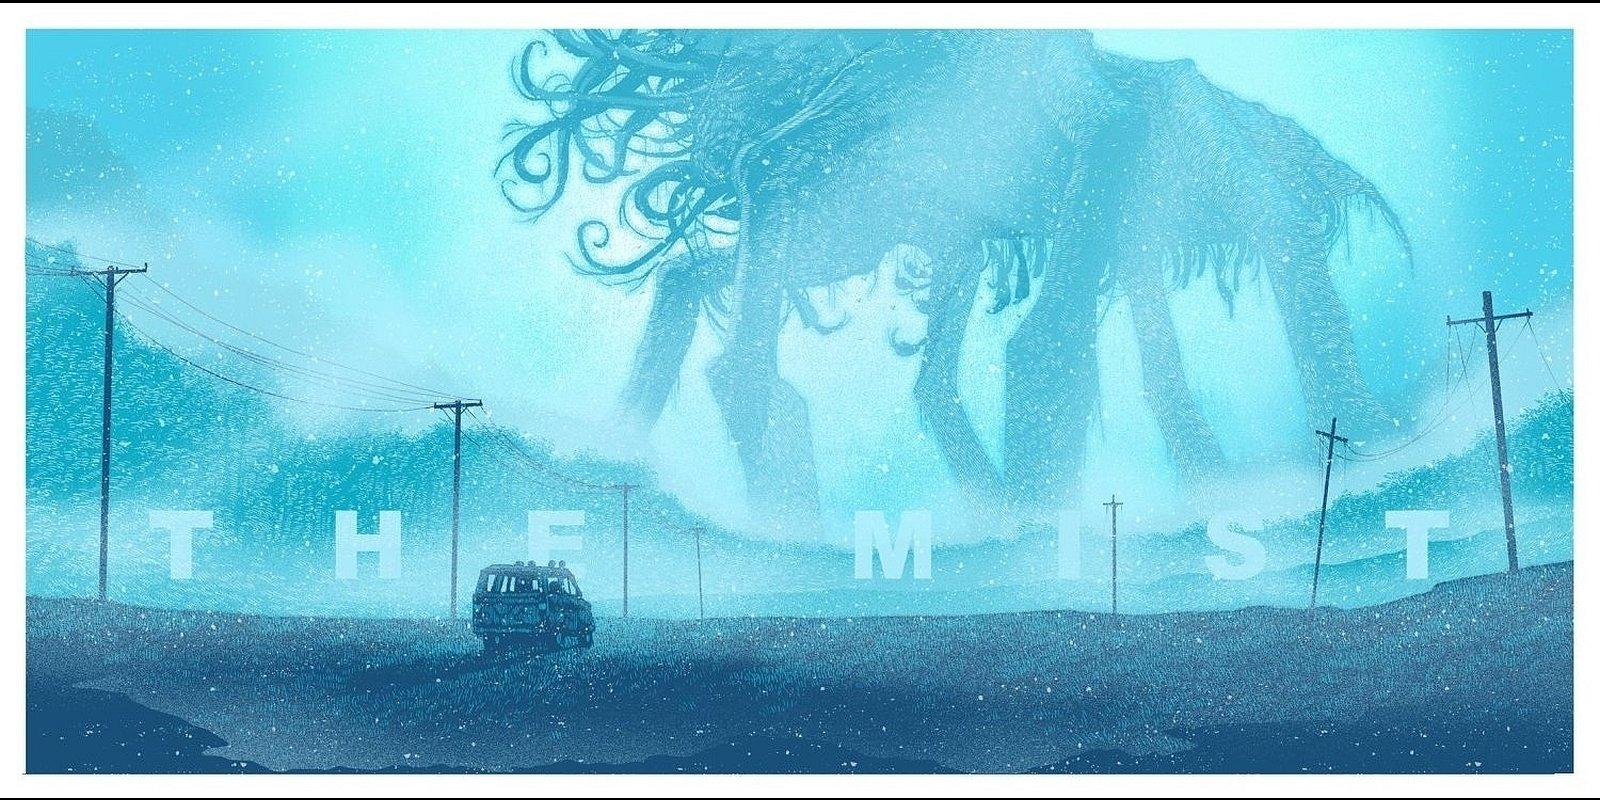 The Mist Wallpaper Image